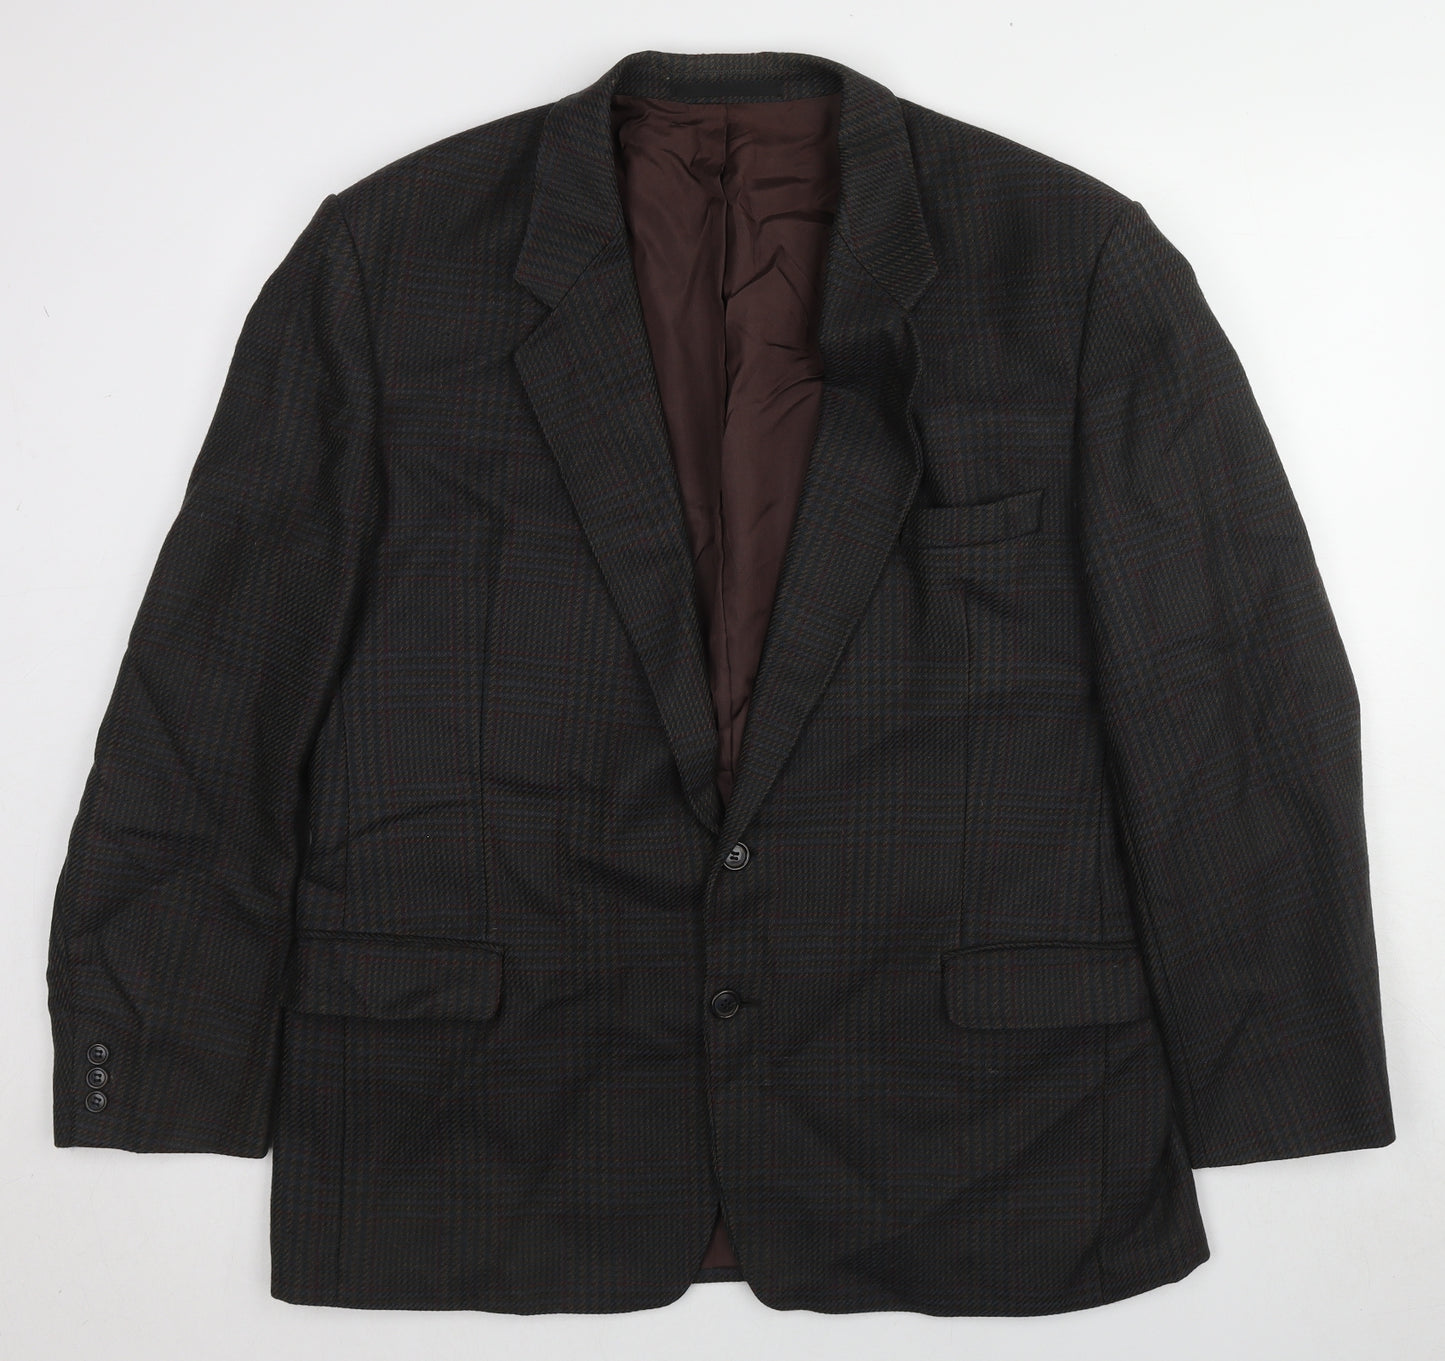 Westbury Mens Black Plaid Wool Jacket Suit Jacket Size 44 Regular